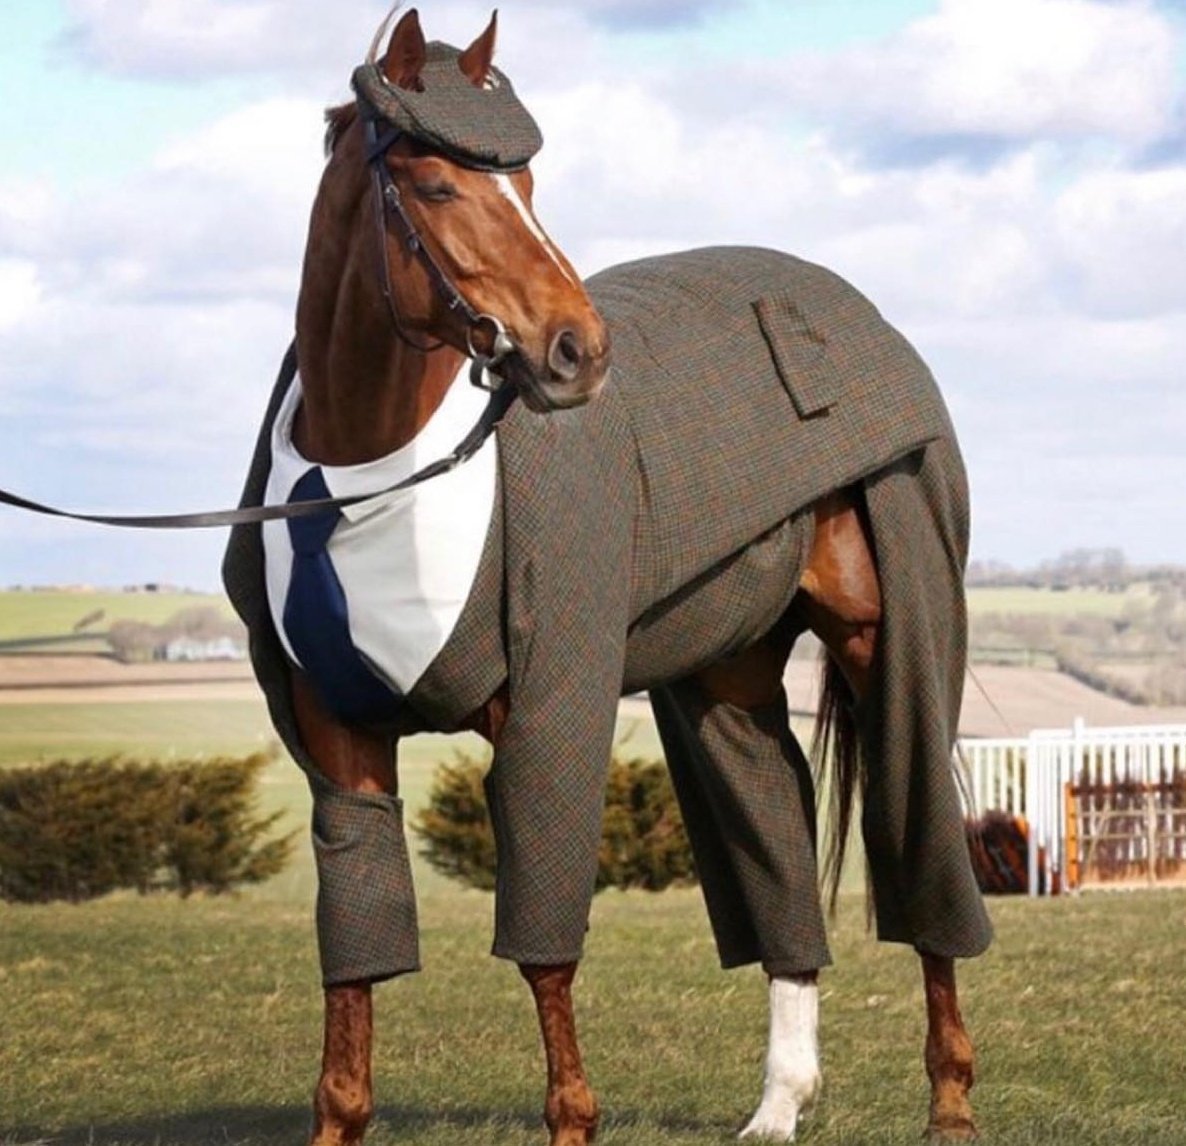 Одежда с лошадьми